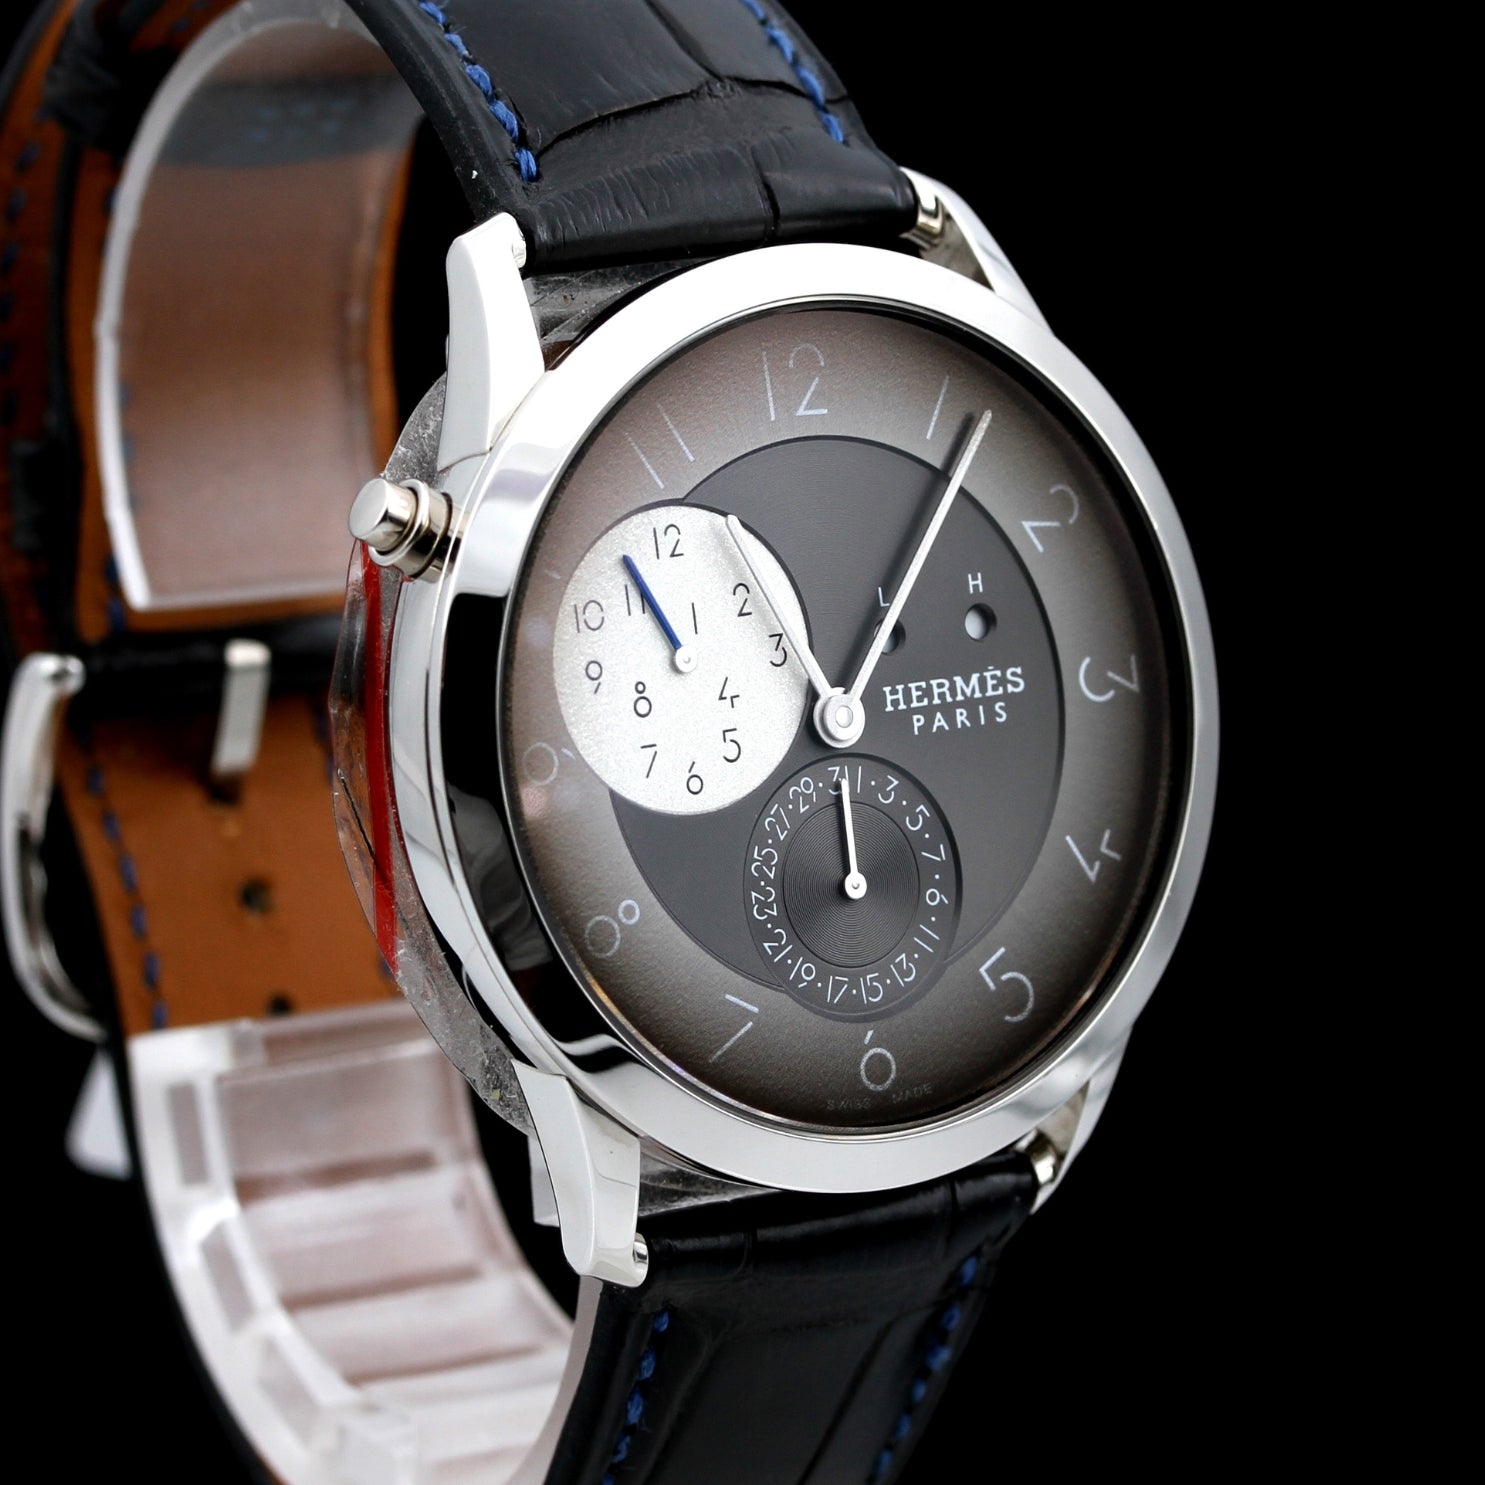 Hermes GMT Slim d´Hermes Paris, Limited Edition 120, Palladium, CA5.860, W046386WW00, B&P - LUXUHRIA